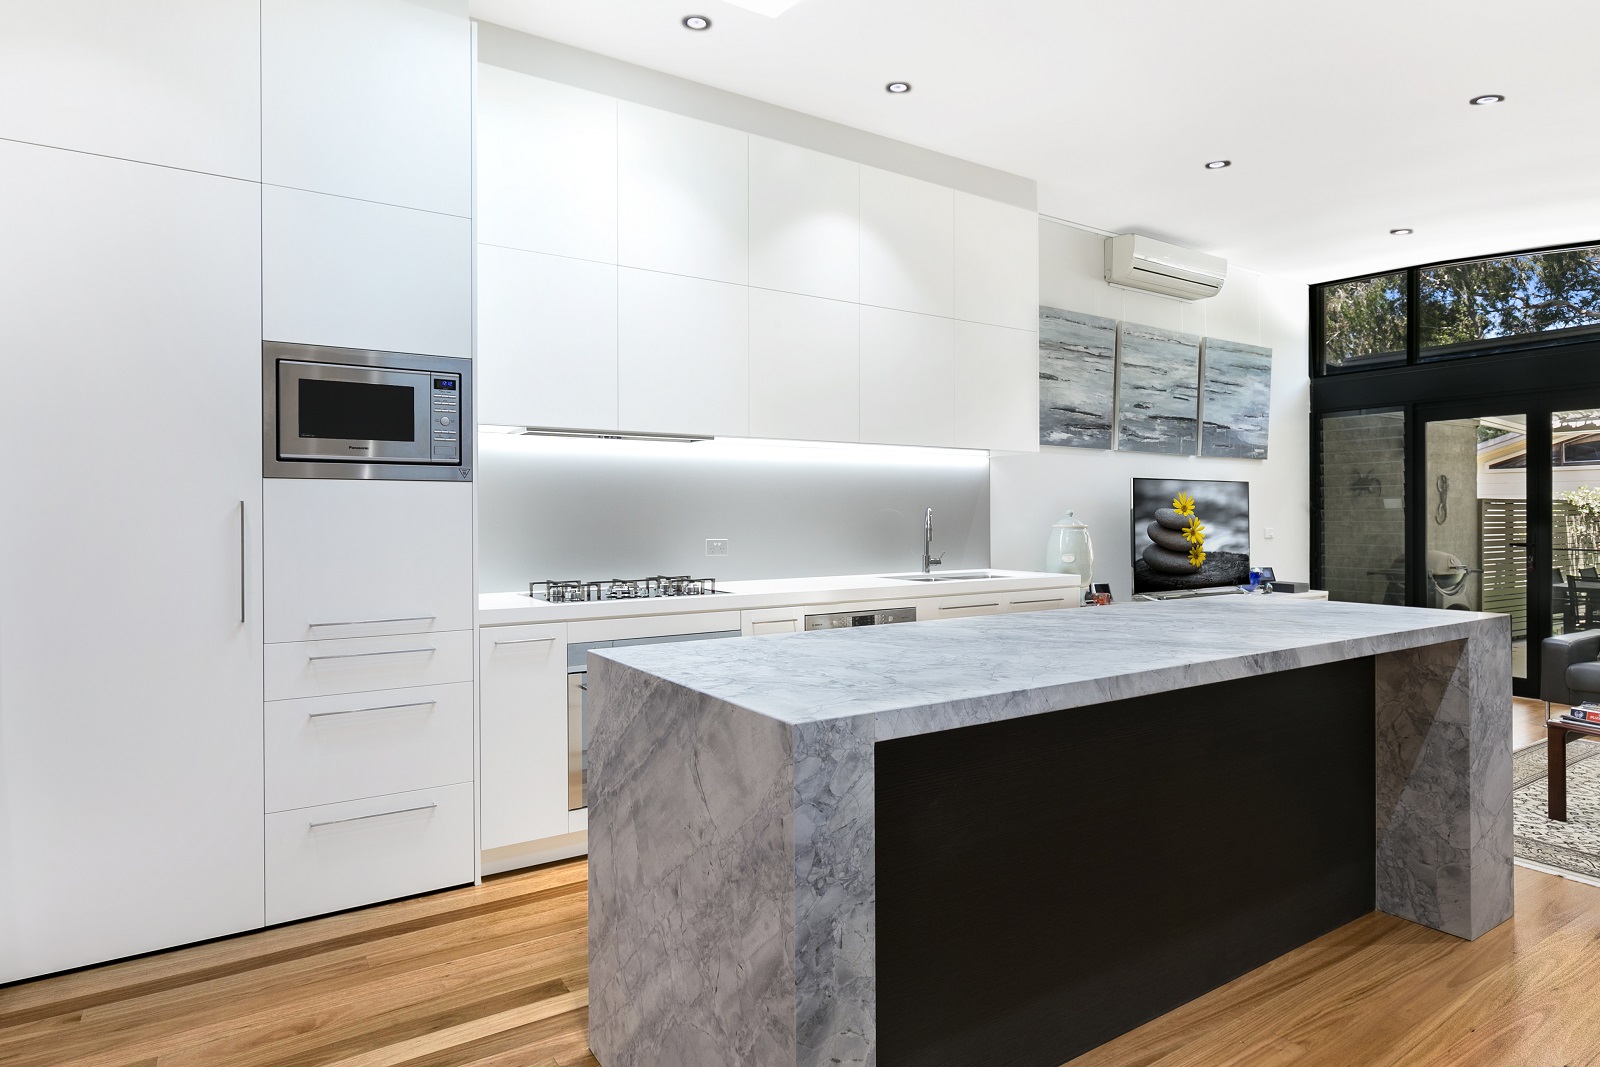 Lilyfield, Polyurethane kitchen with Super White Granite in a honed finish